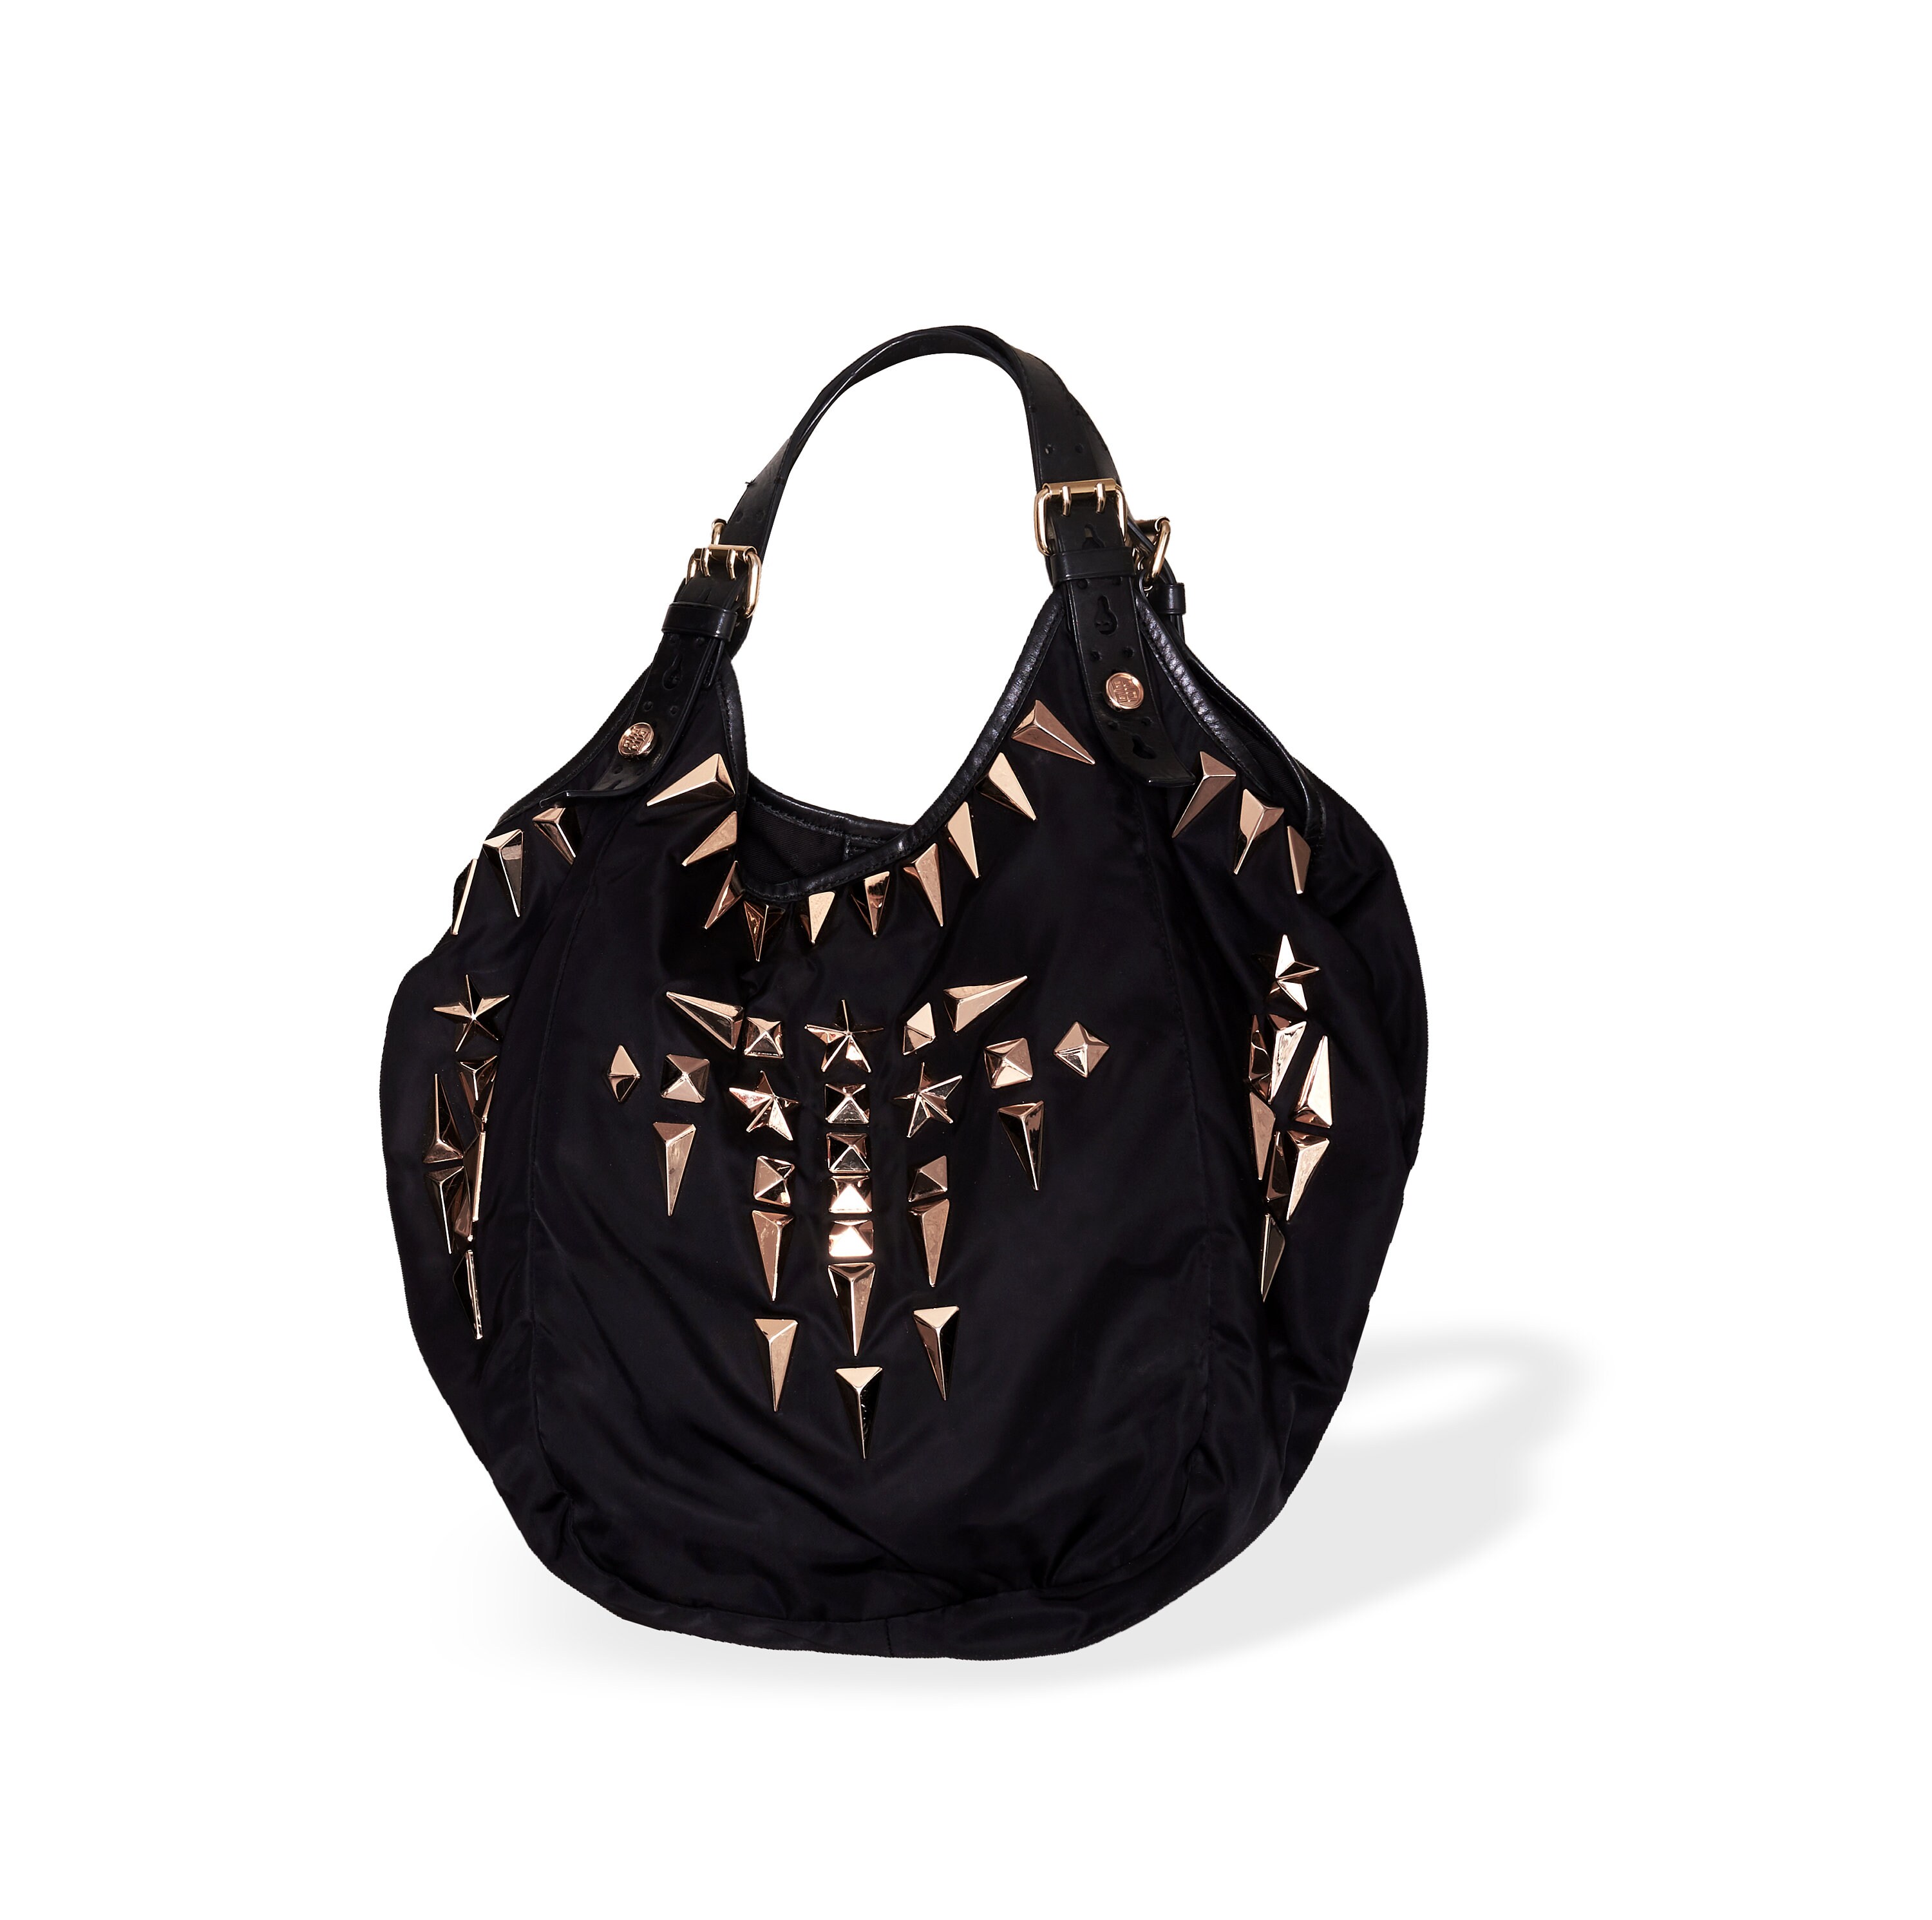 Authentic GIVENCHY Studded Nylon Handbag Black Shoulder Bag - Etsy